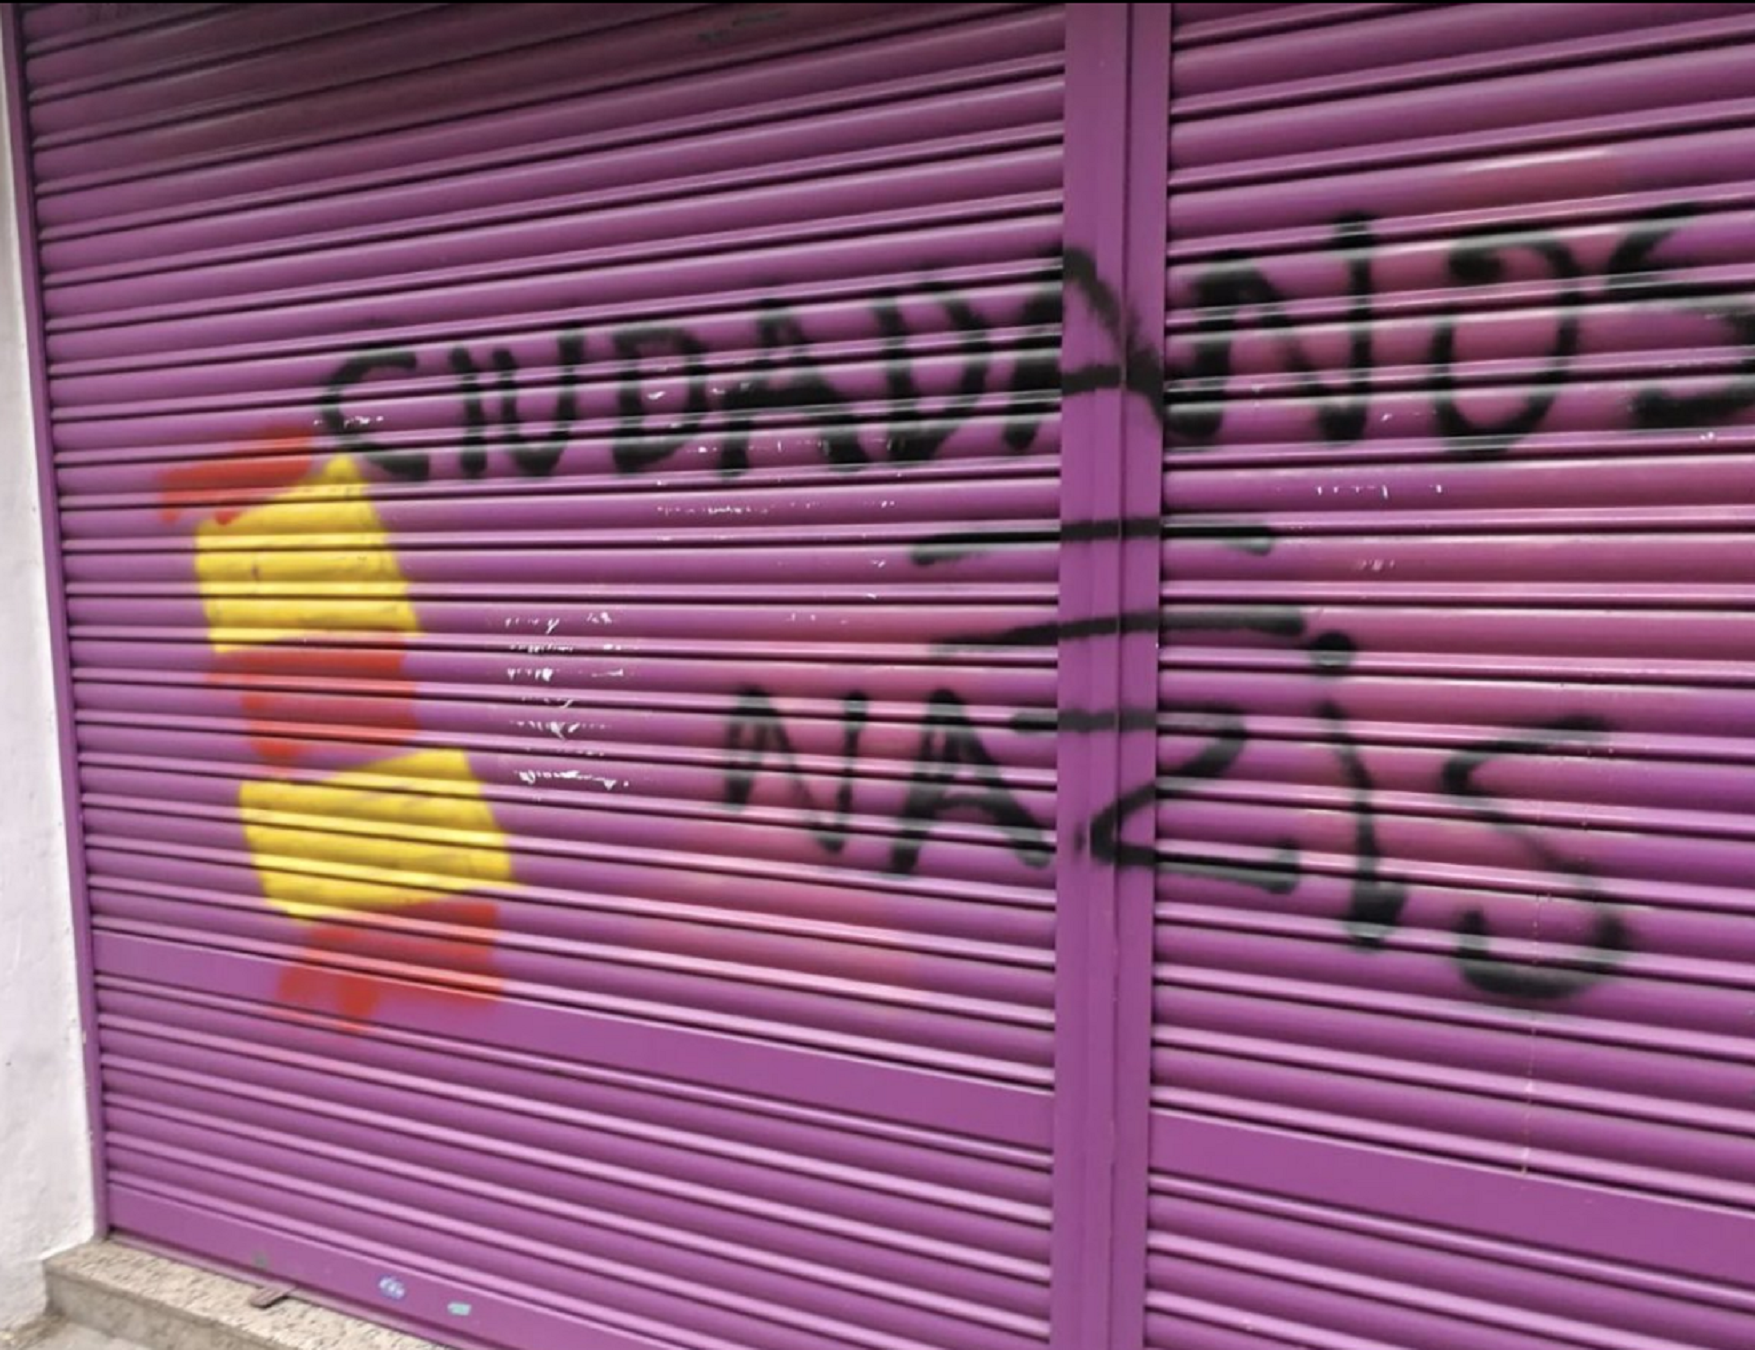 Rahola acusa a Albert Rivera de manipular un grafiti para atacar a indepes